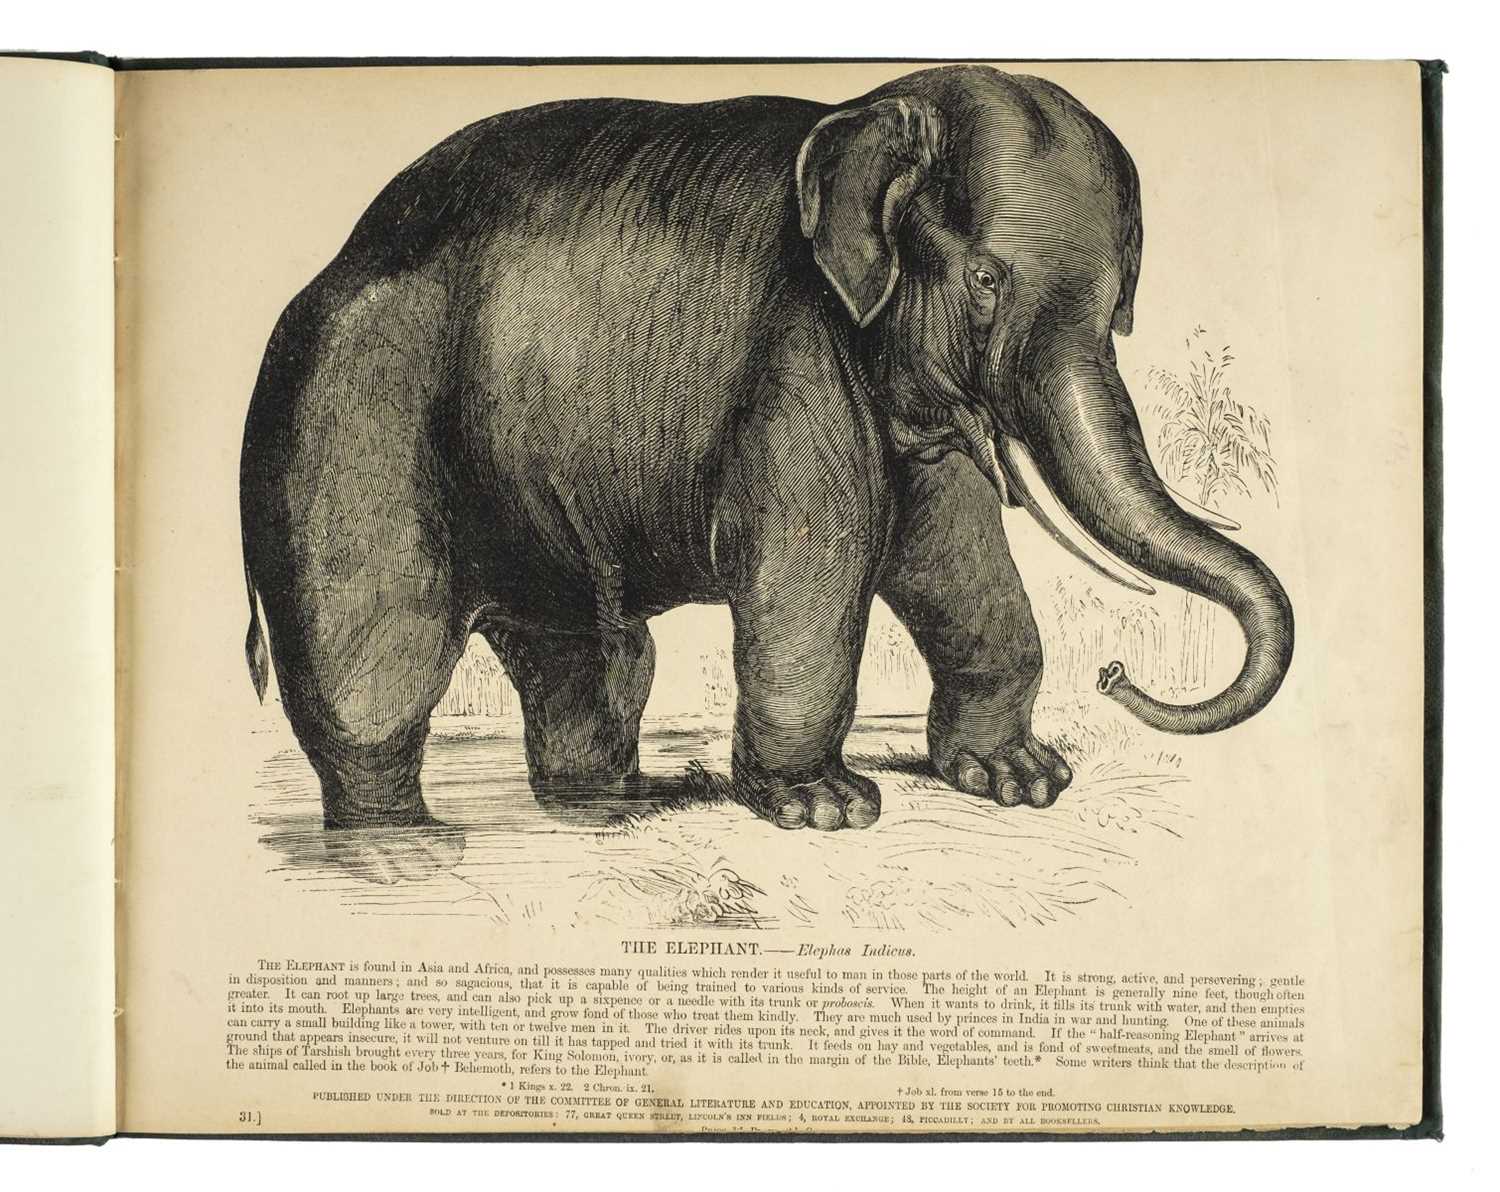 Lot 222 - Whymper (Josiah Wood). Plates Illustrative of Natural History, 1843-50